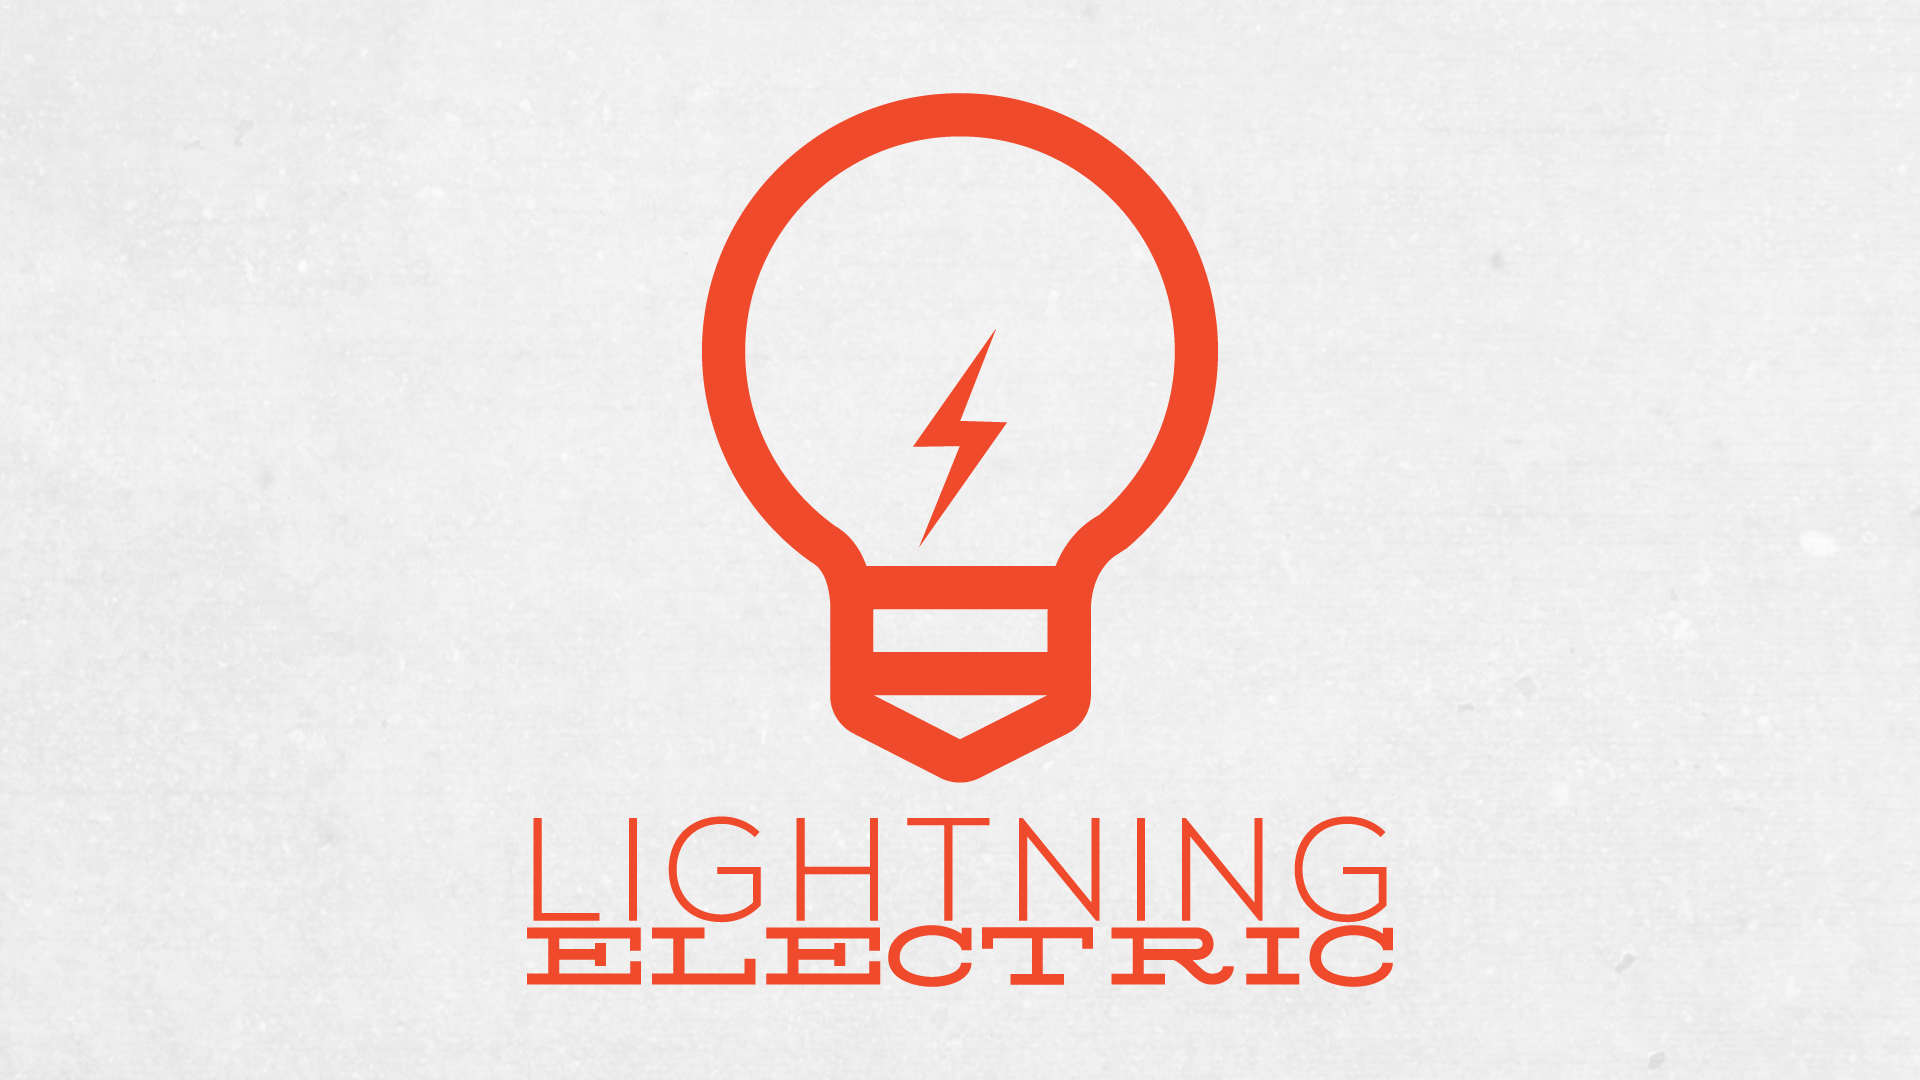 Electric Company Logo - Lightning Electric